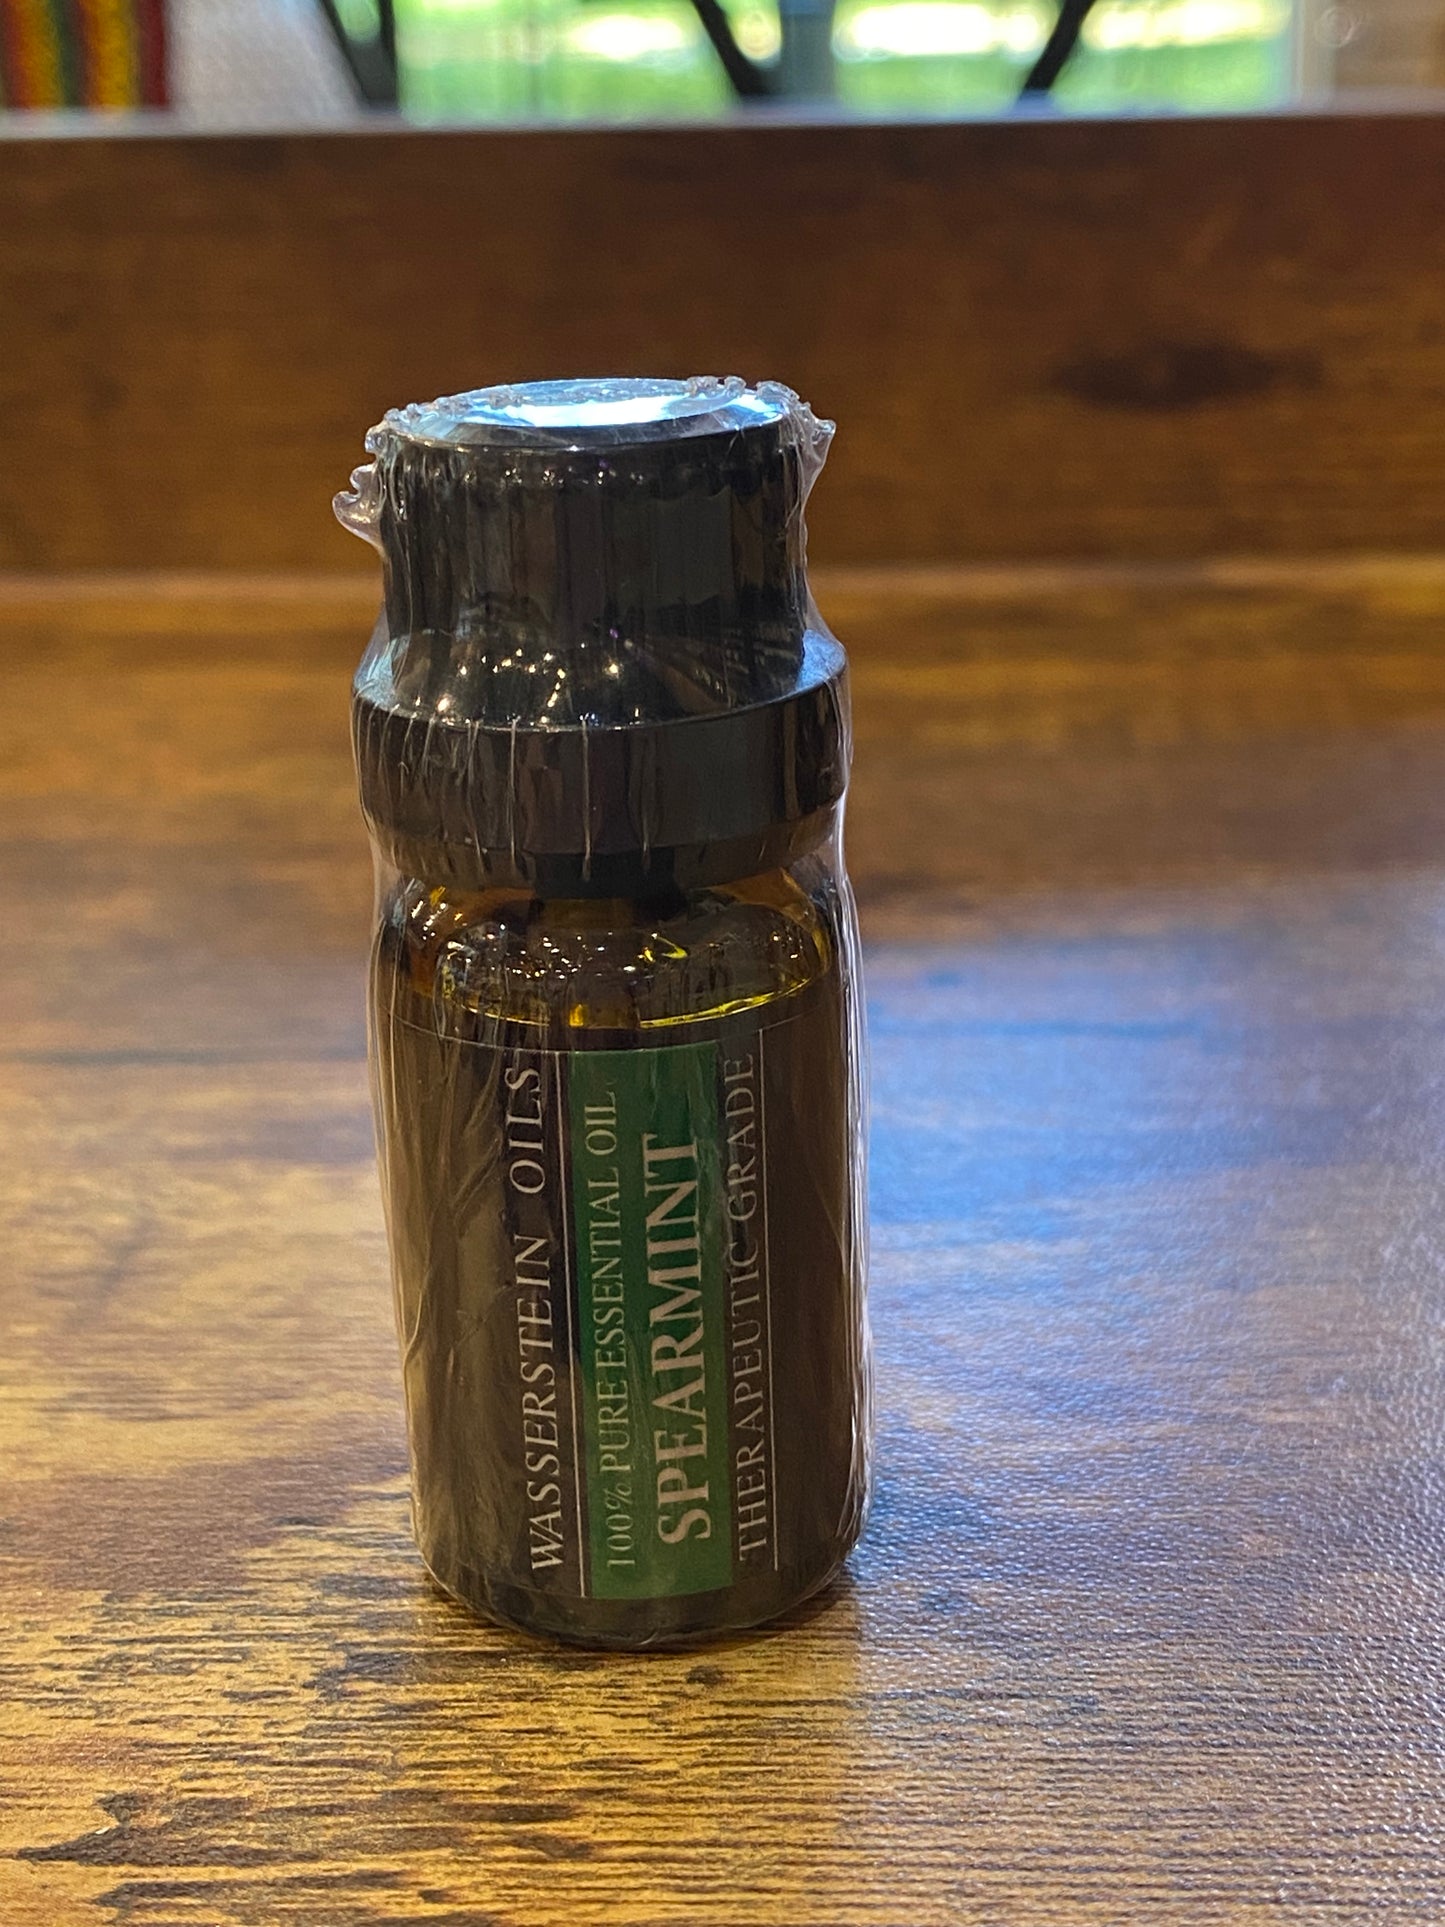 Wasserstein Essential Oils Therapeutic Grade Spearmint